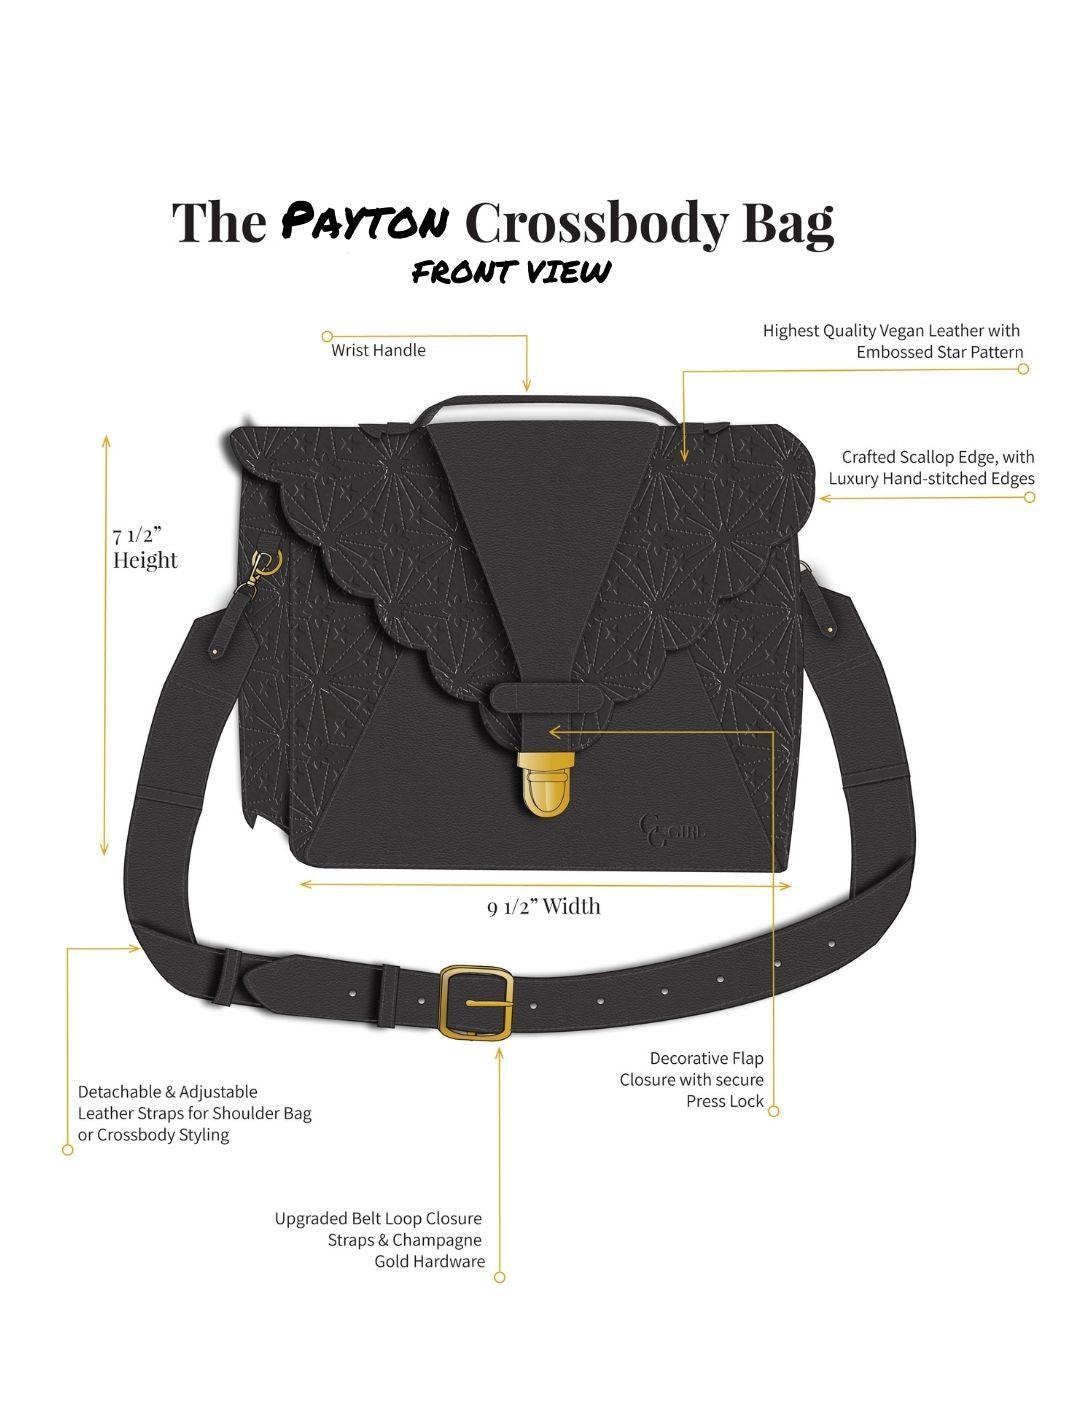 Immediate Purchase, MK Pochette Crossbody Bag